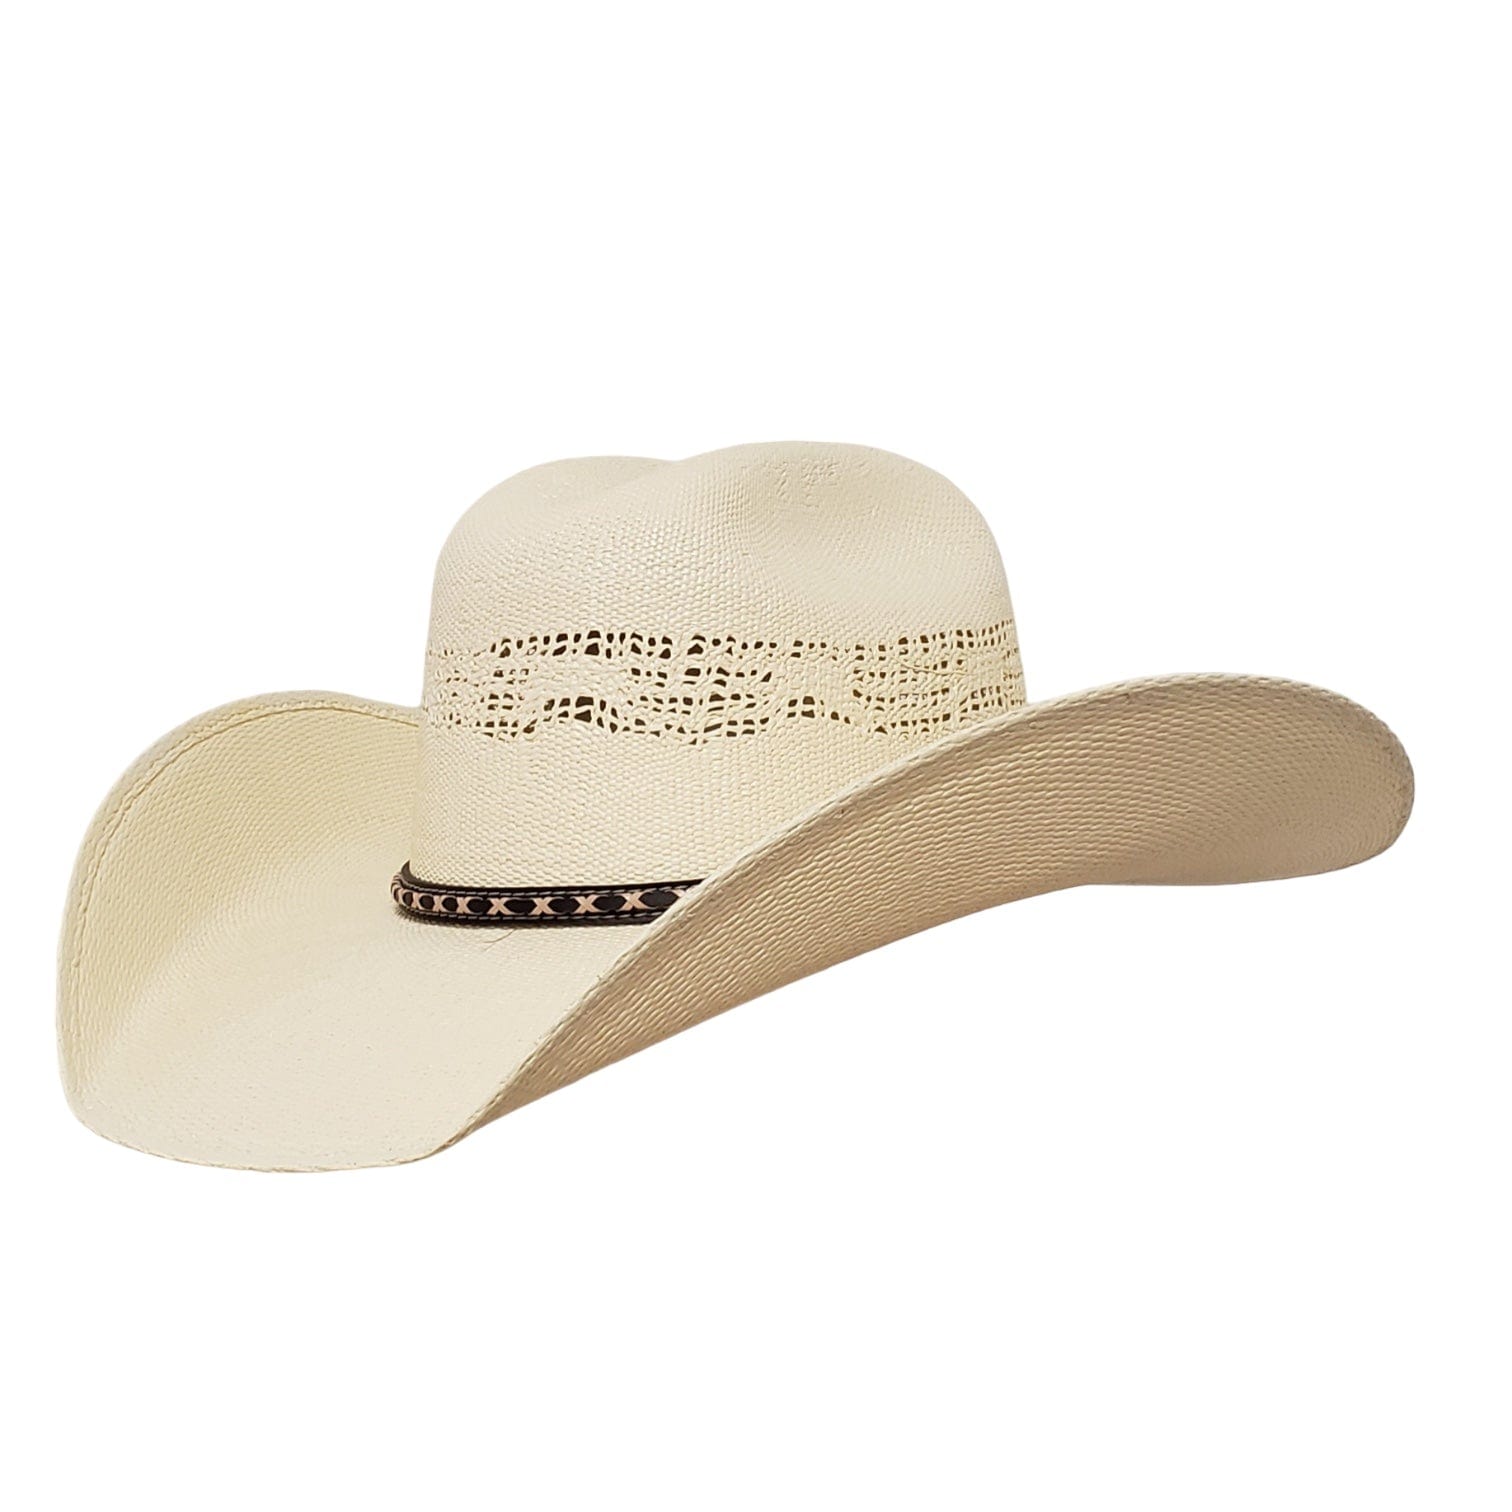 Gone Country Hats Men & Women's Hats Justin Ivory - Straw Bangora